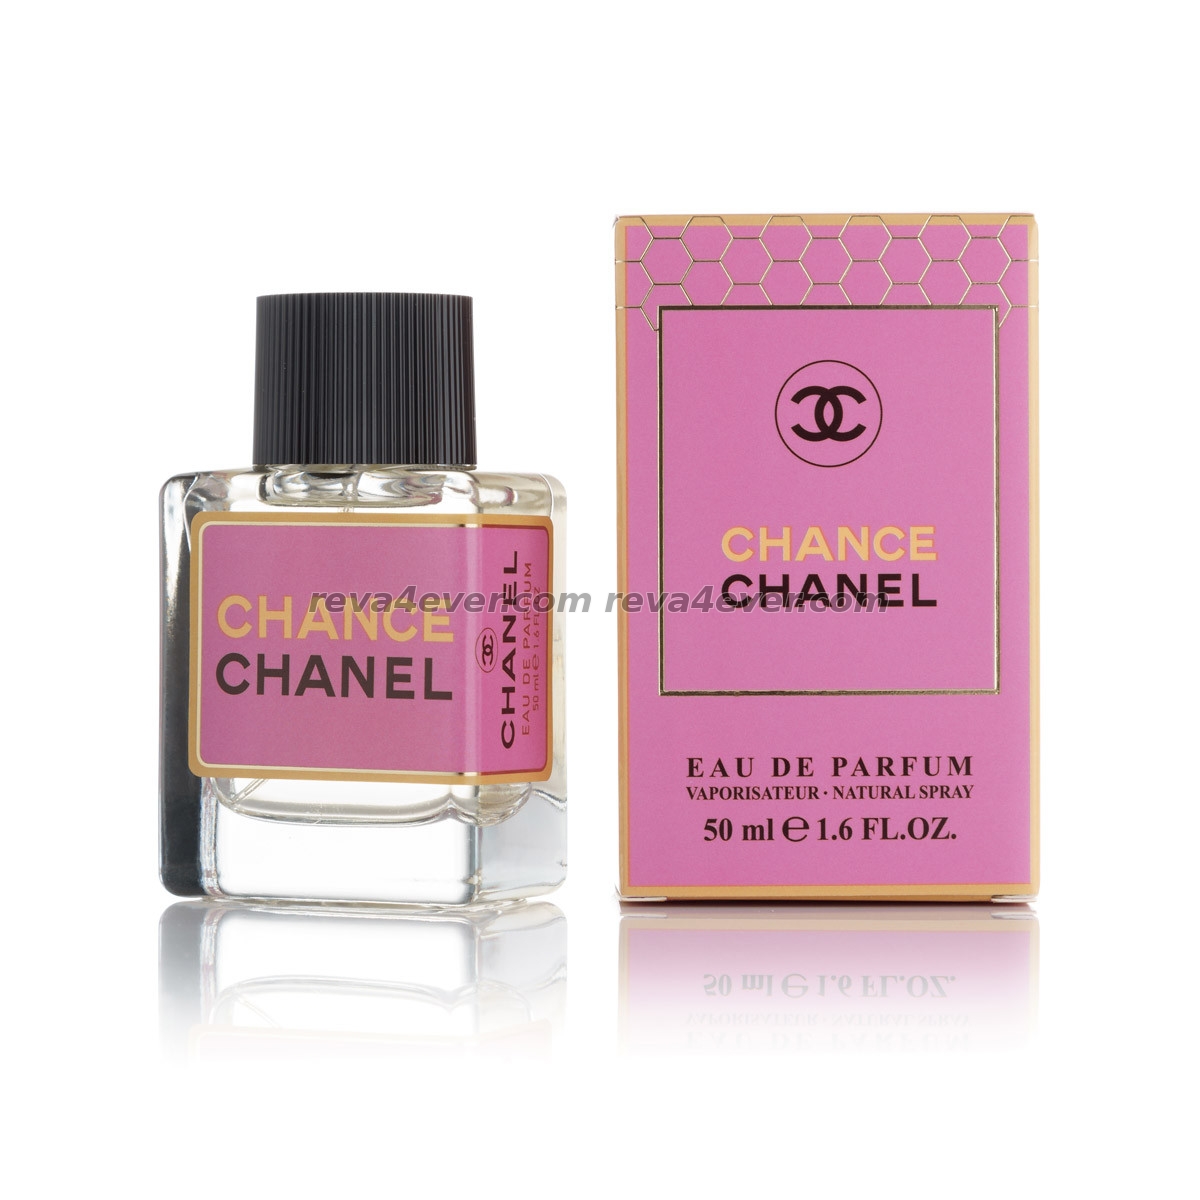 Chanel Chance edp 50 ml color box